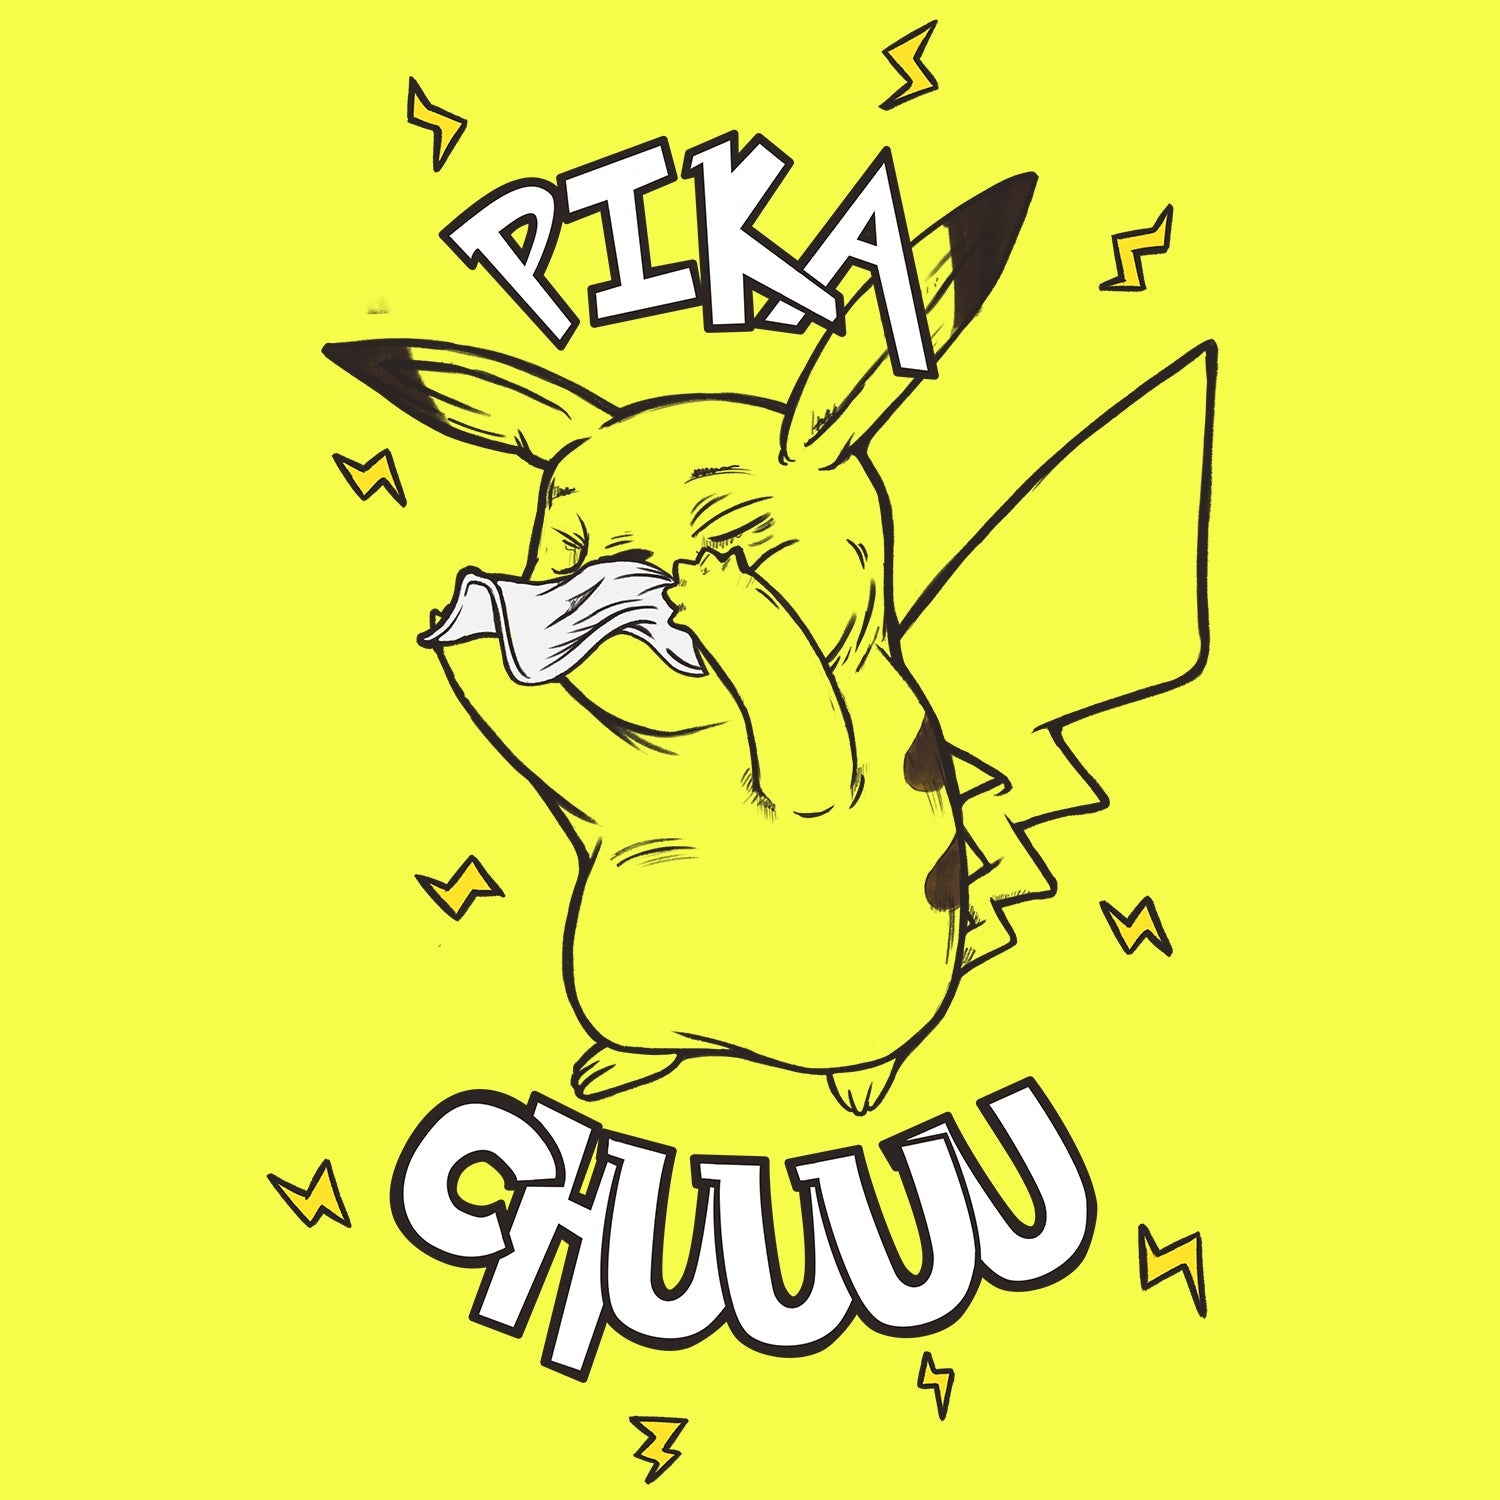 Pika-Chuuuu Kids T Shirt